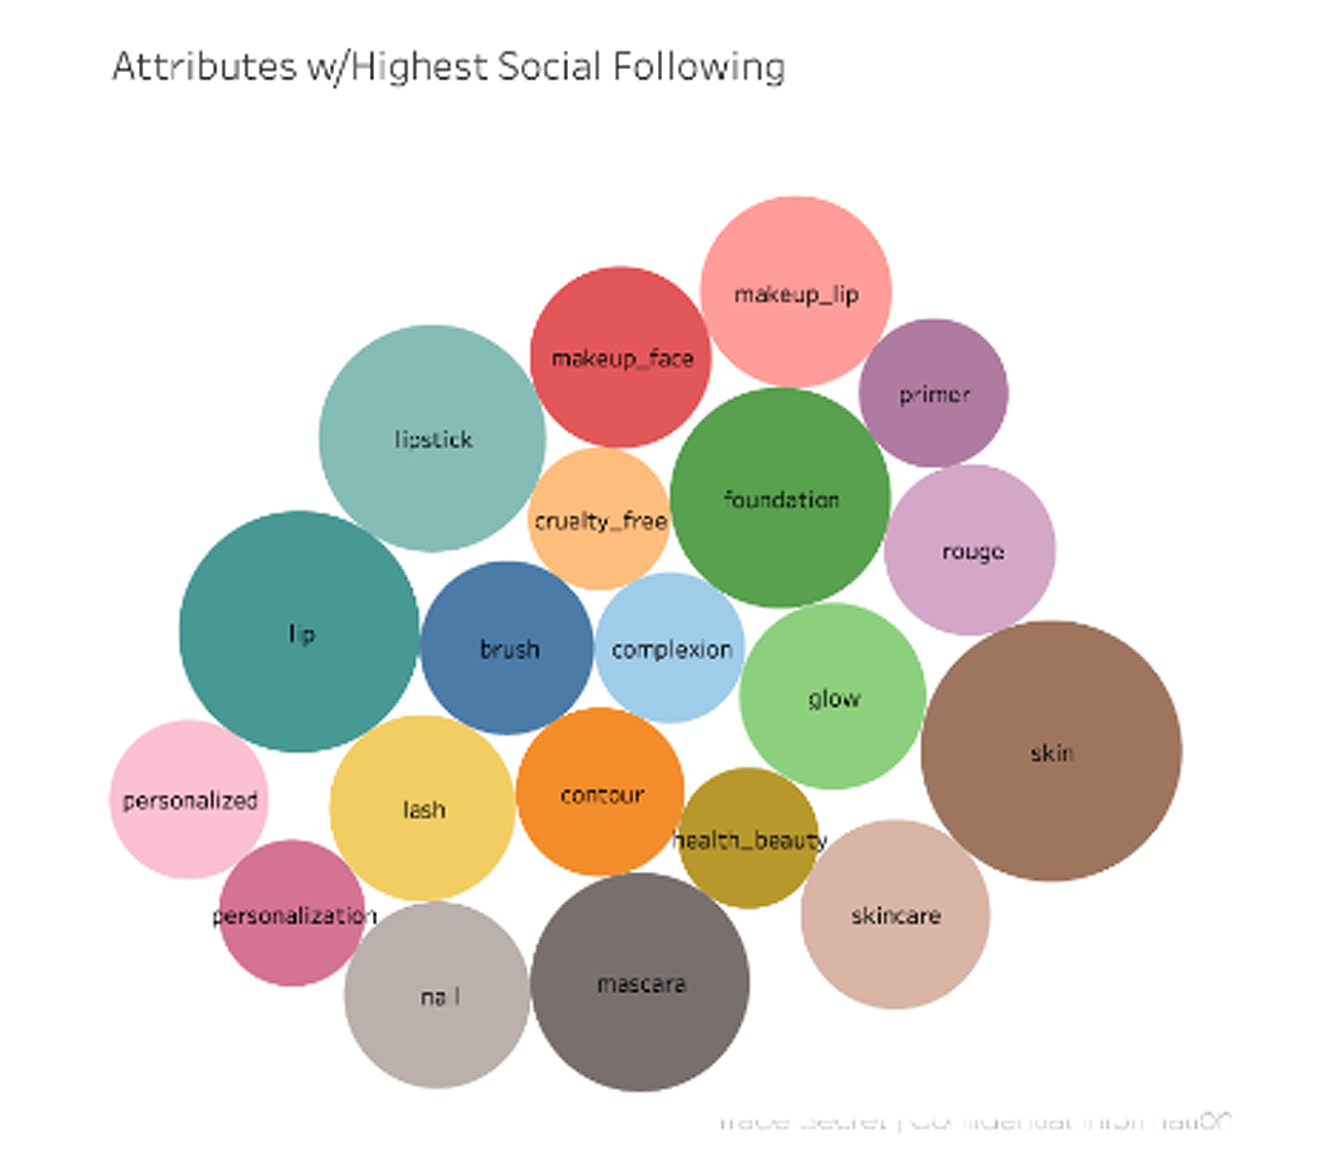 Attributes w/Highest Social Following